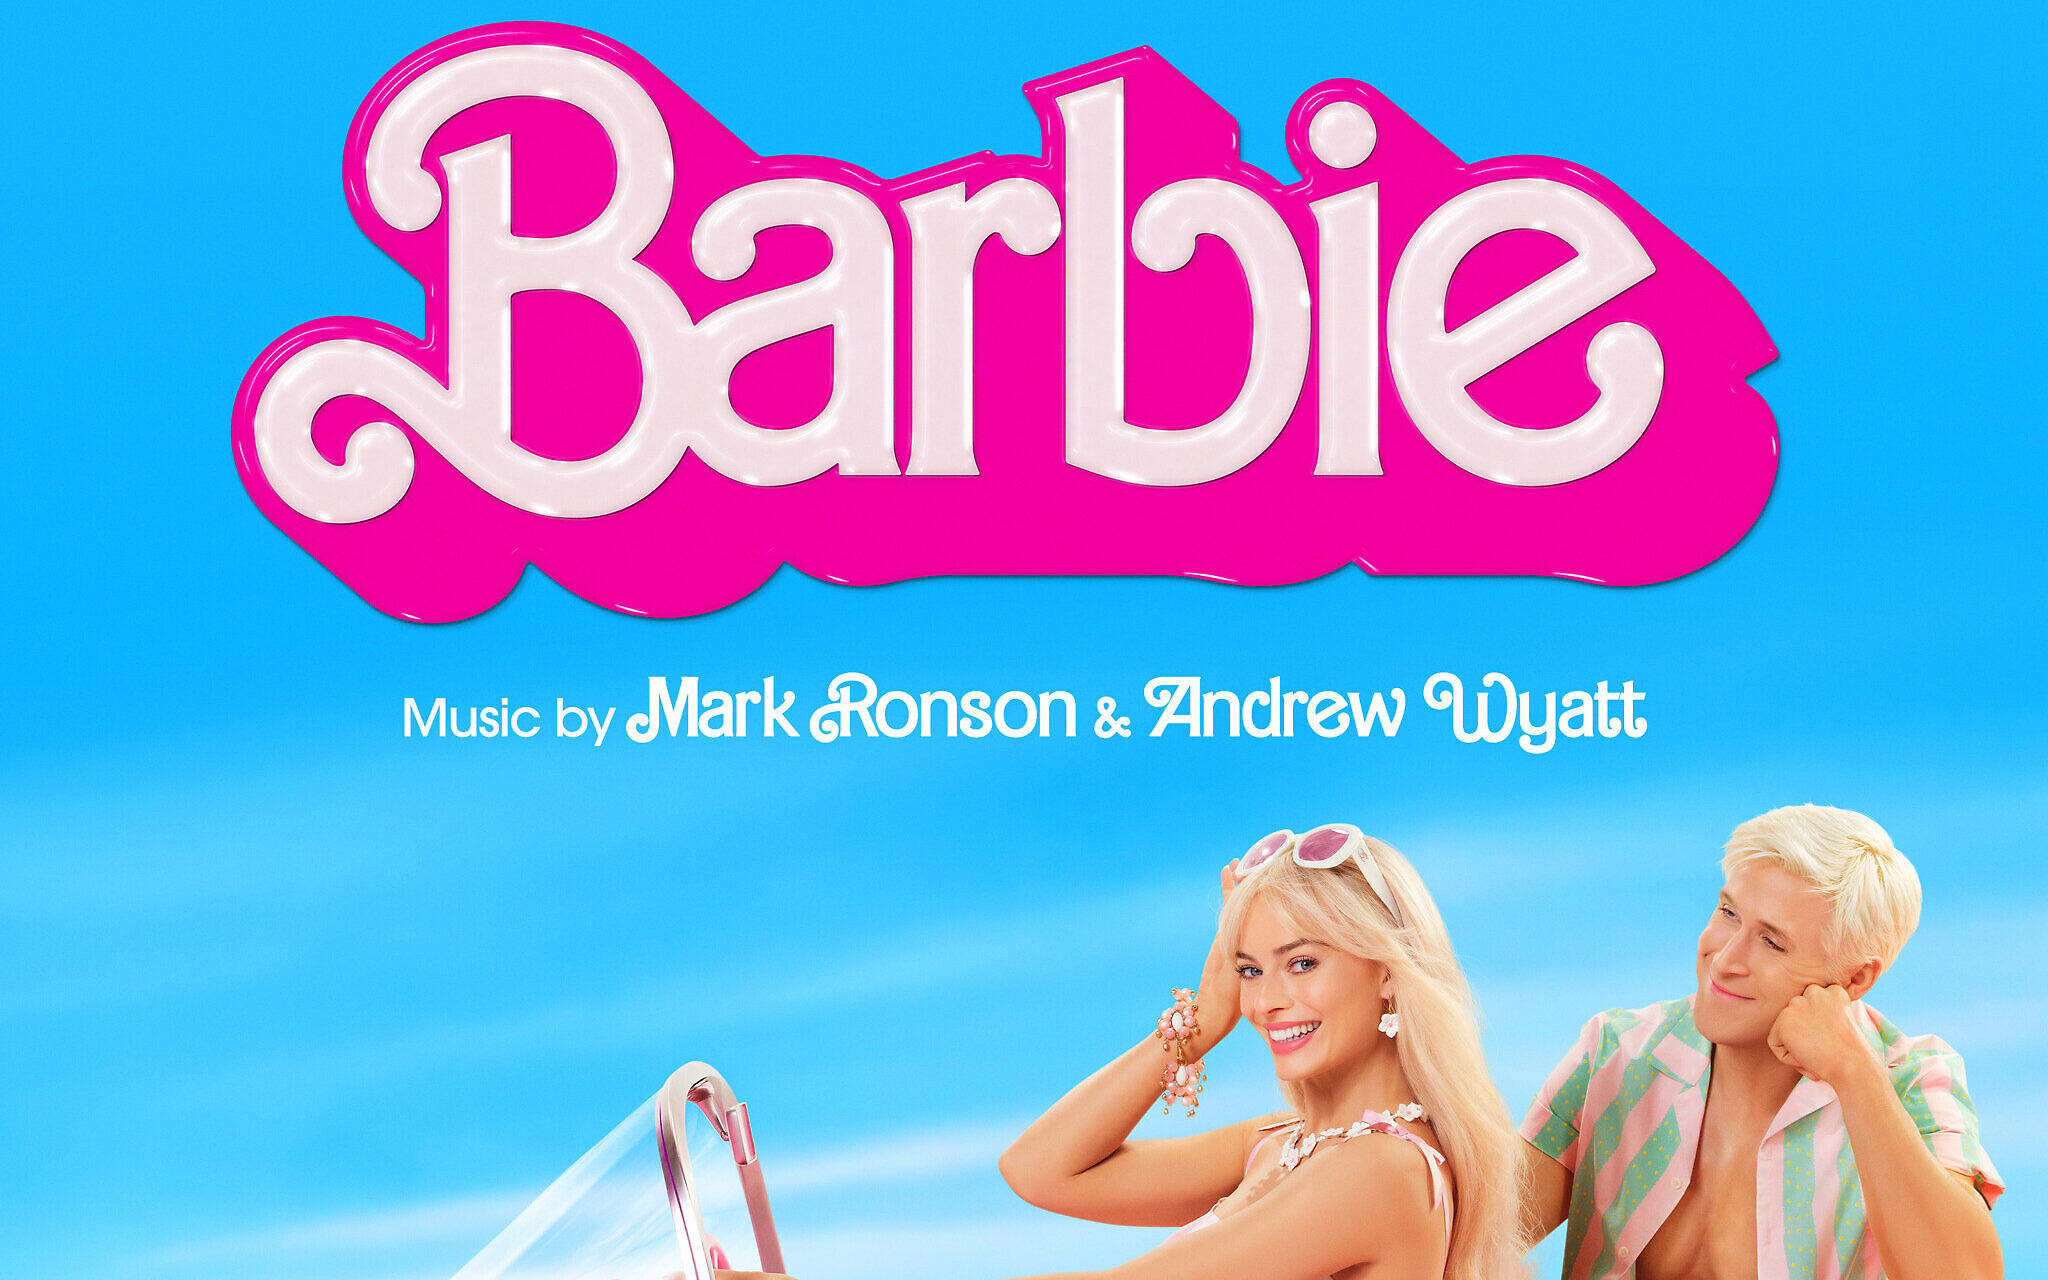 Kuwait bans Barbie film over public ethics concerns The Times of Israel